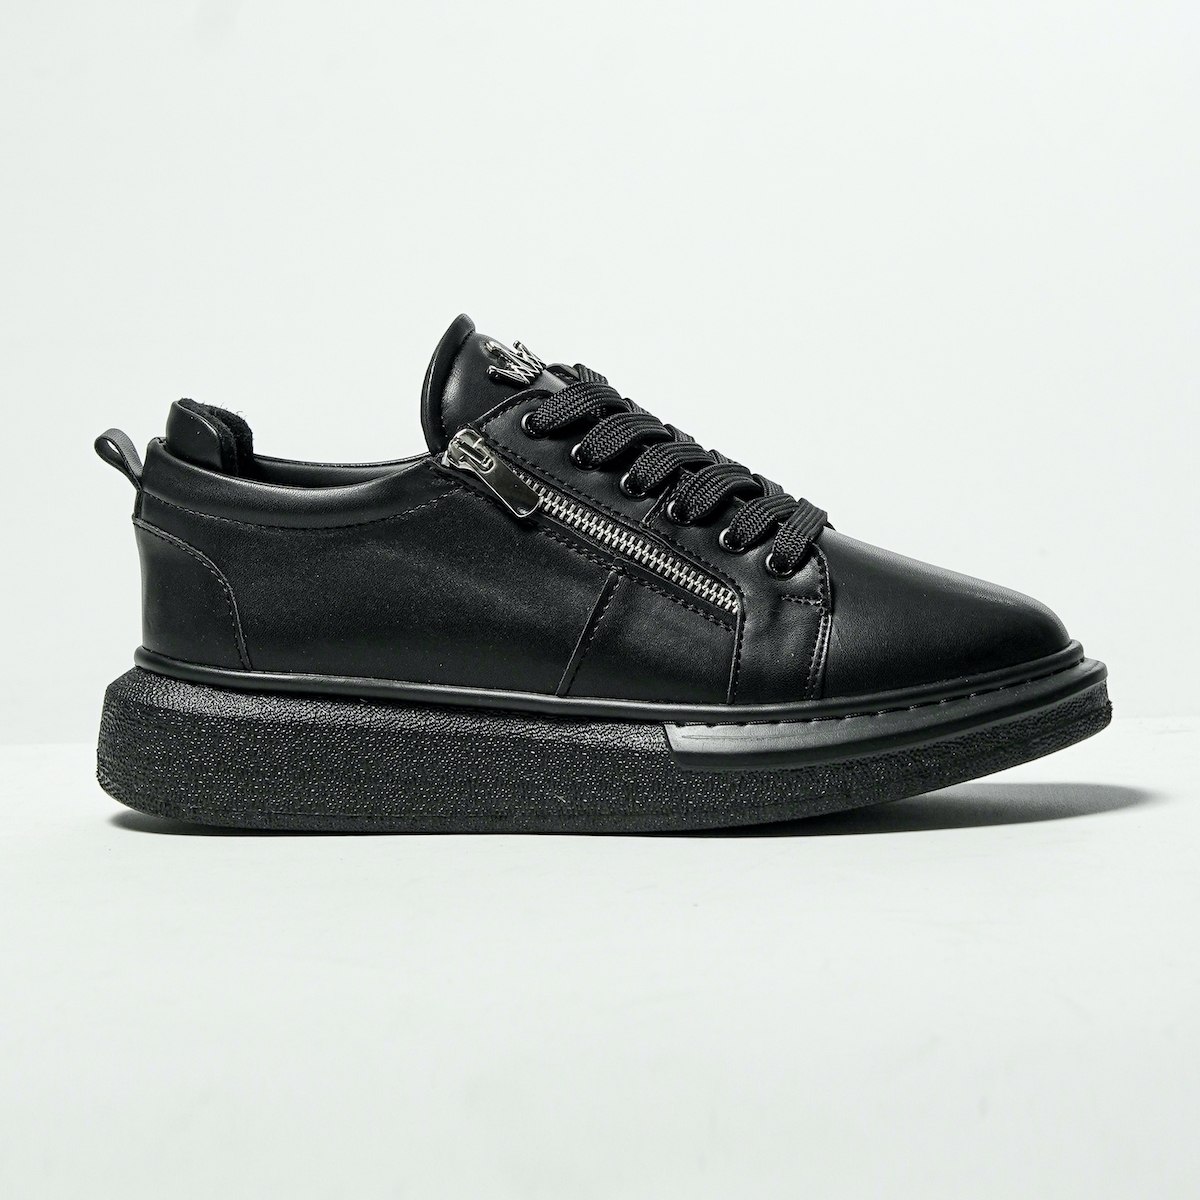 Temmen Opa Post impressionisme Hype Sole Zipped Style Sneakers in Black